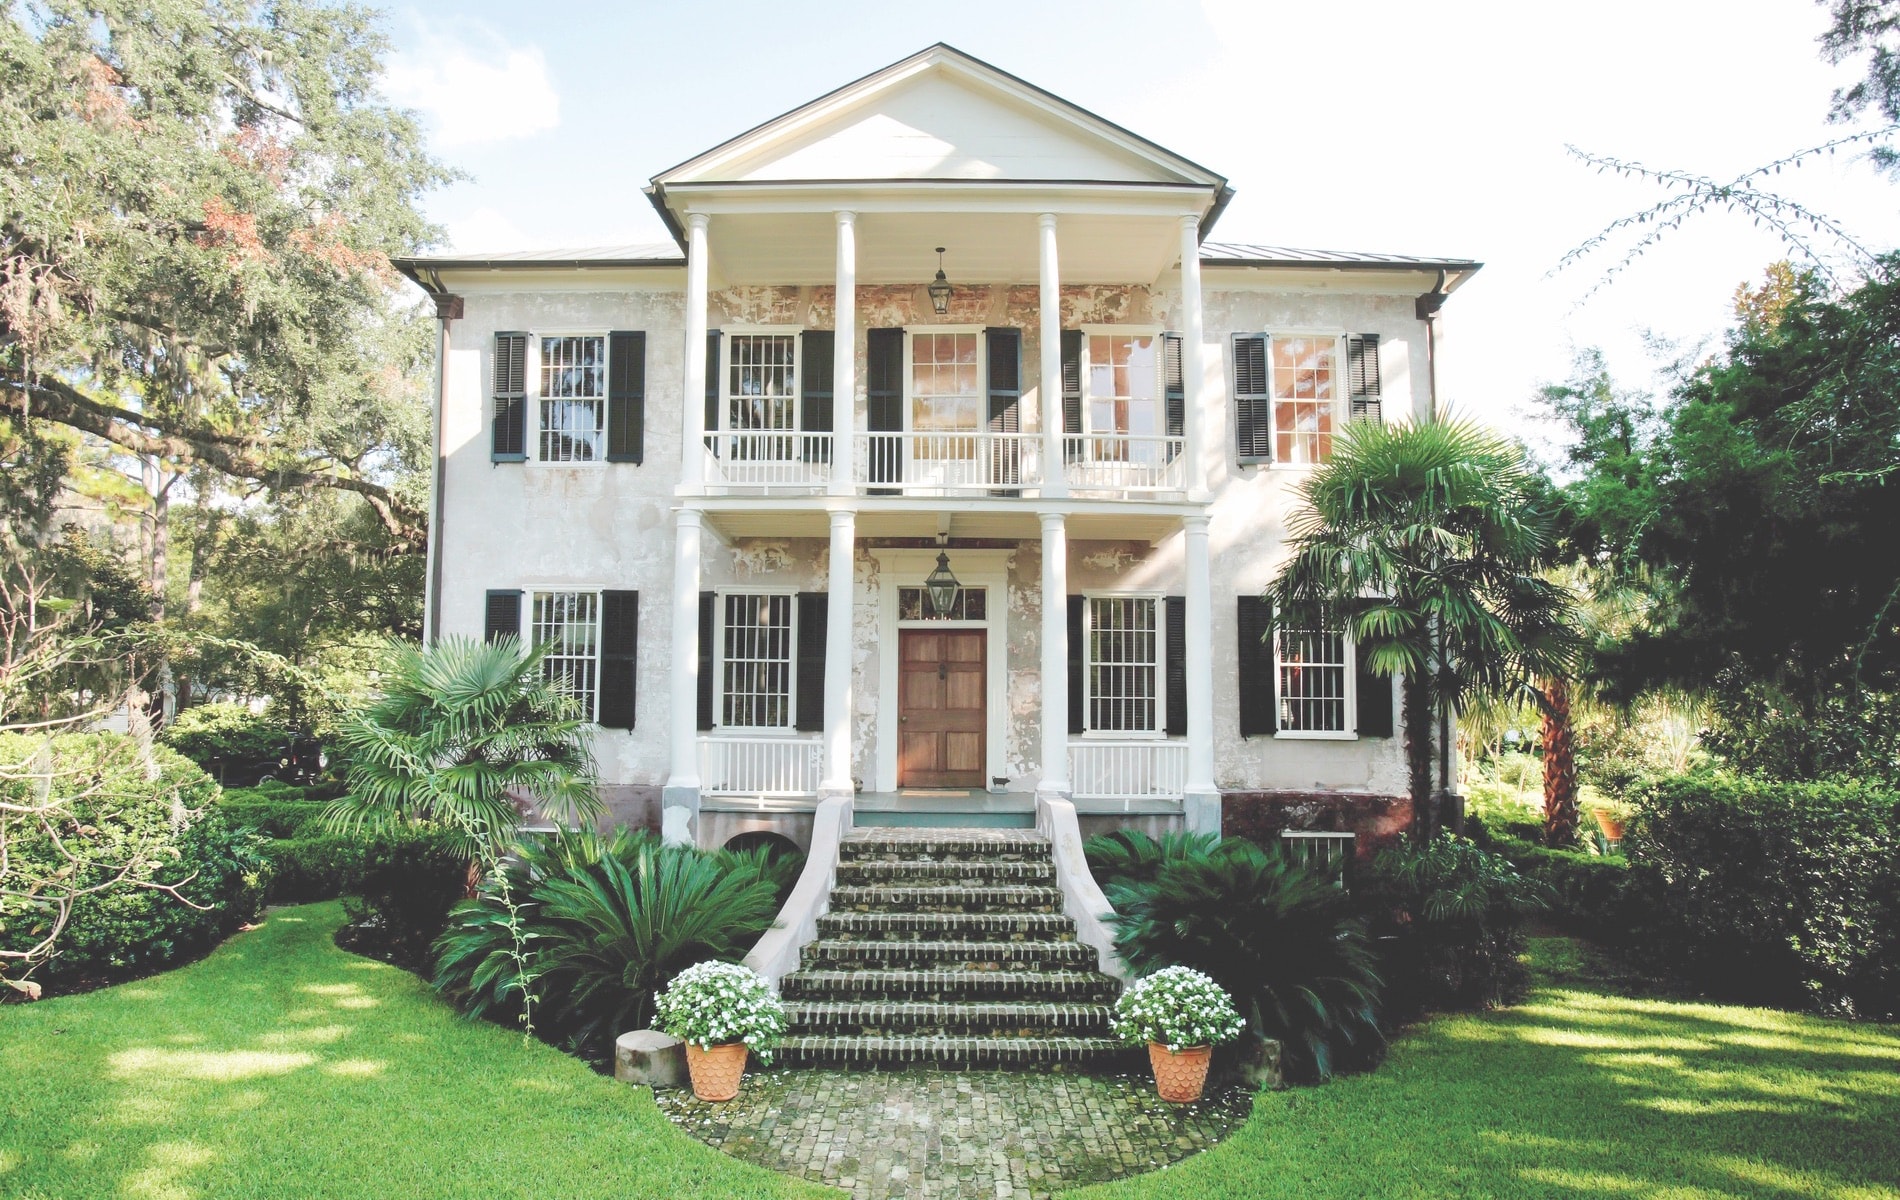 The Elizabeth Barnwell Gough House in Beaufort, South Carolina, built in 1870